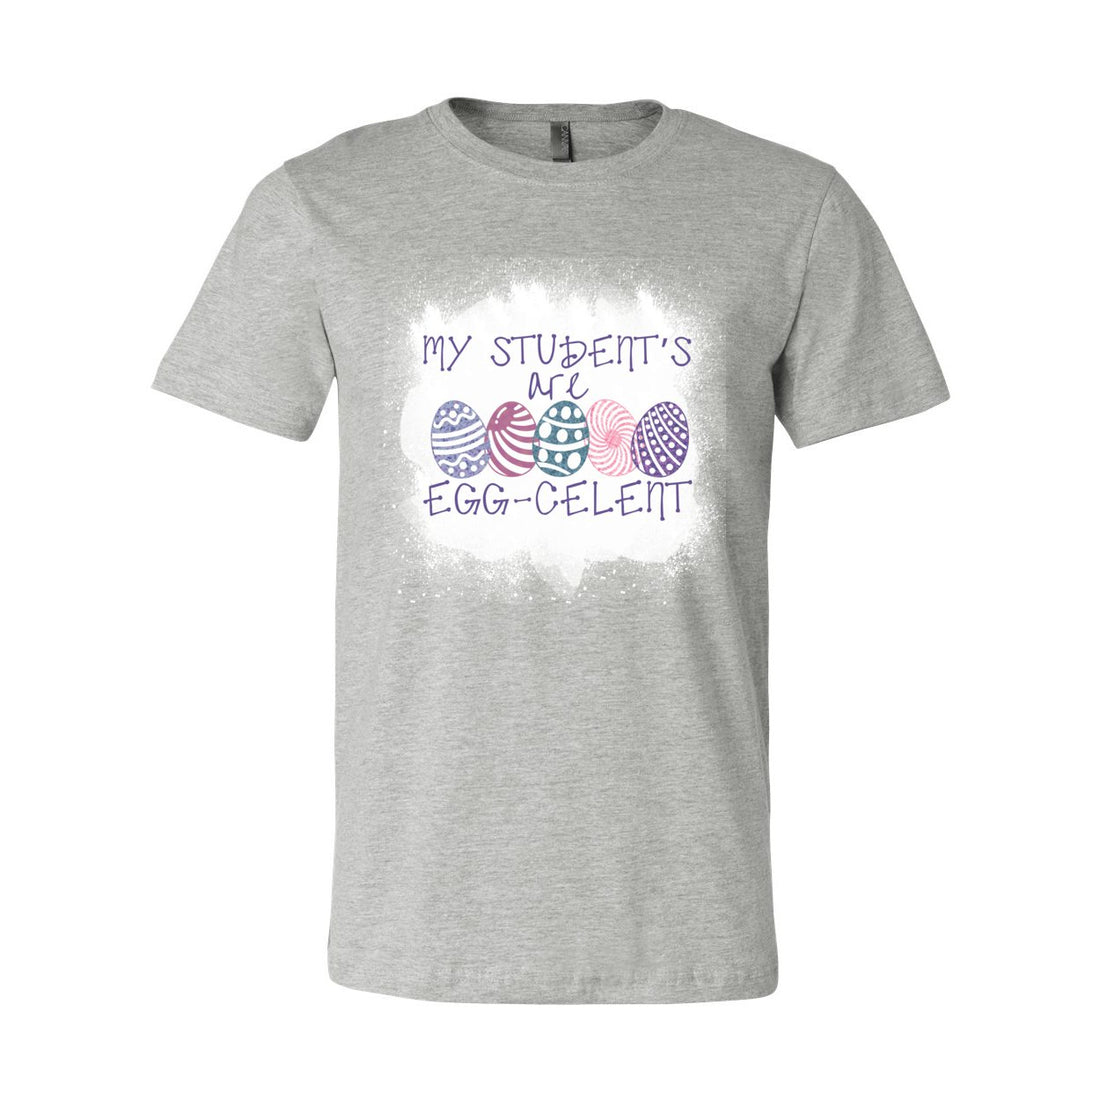 Eggcelent Students Tee - T-Shirts - Positively Sassy - Eggcelent Students Tee